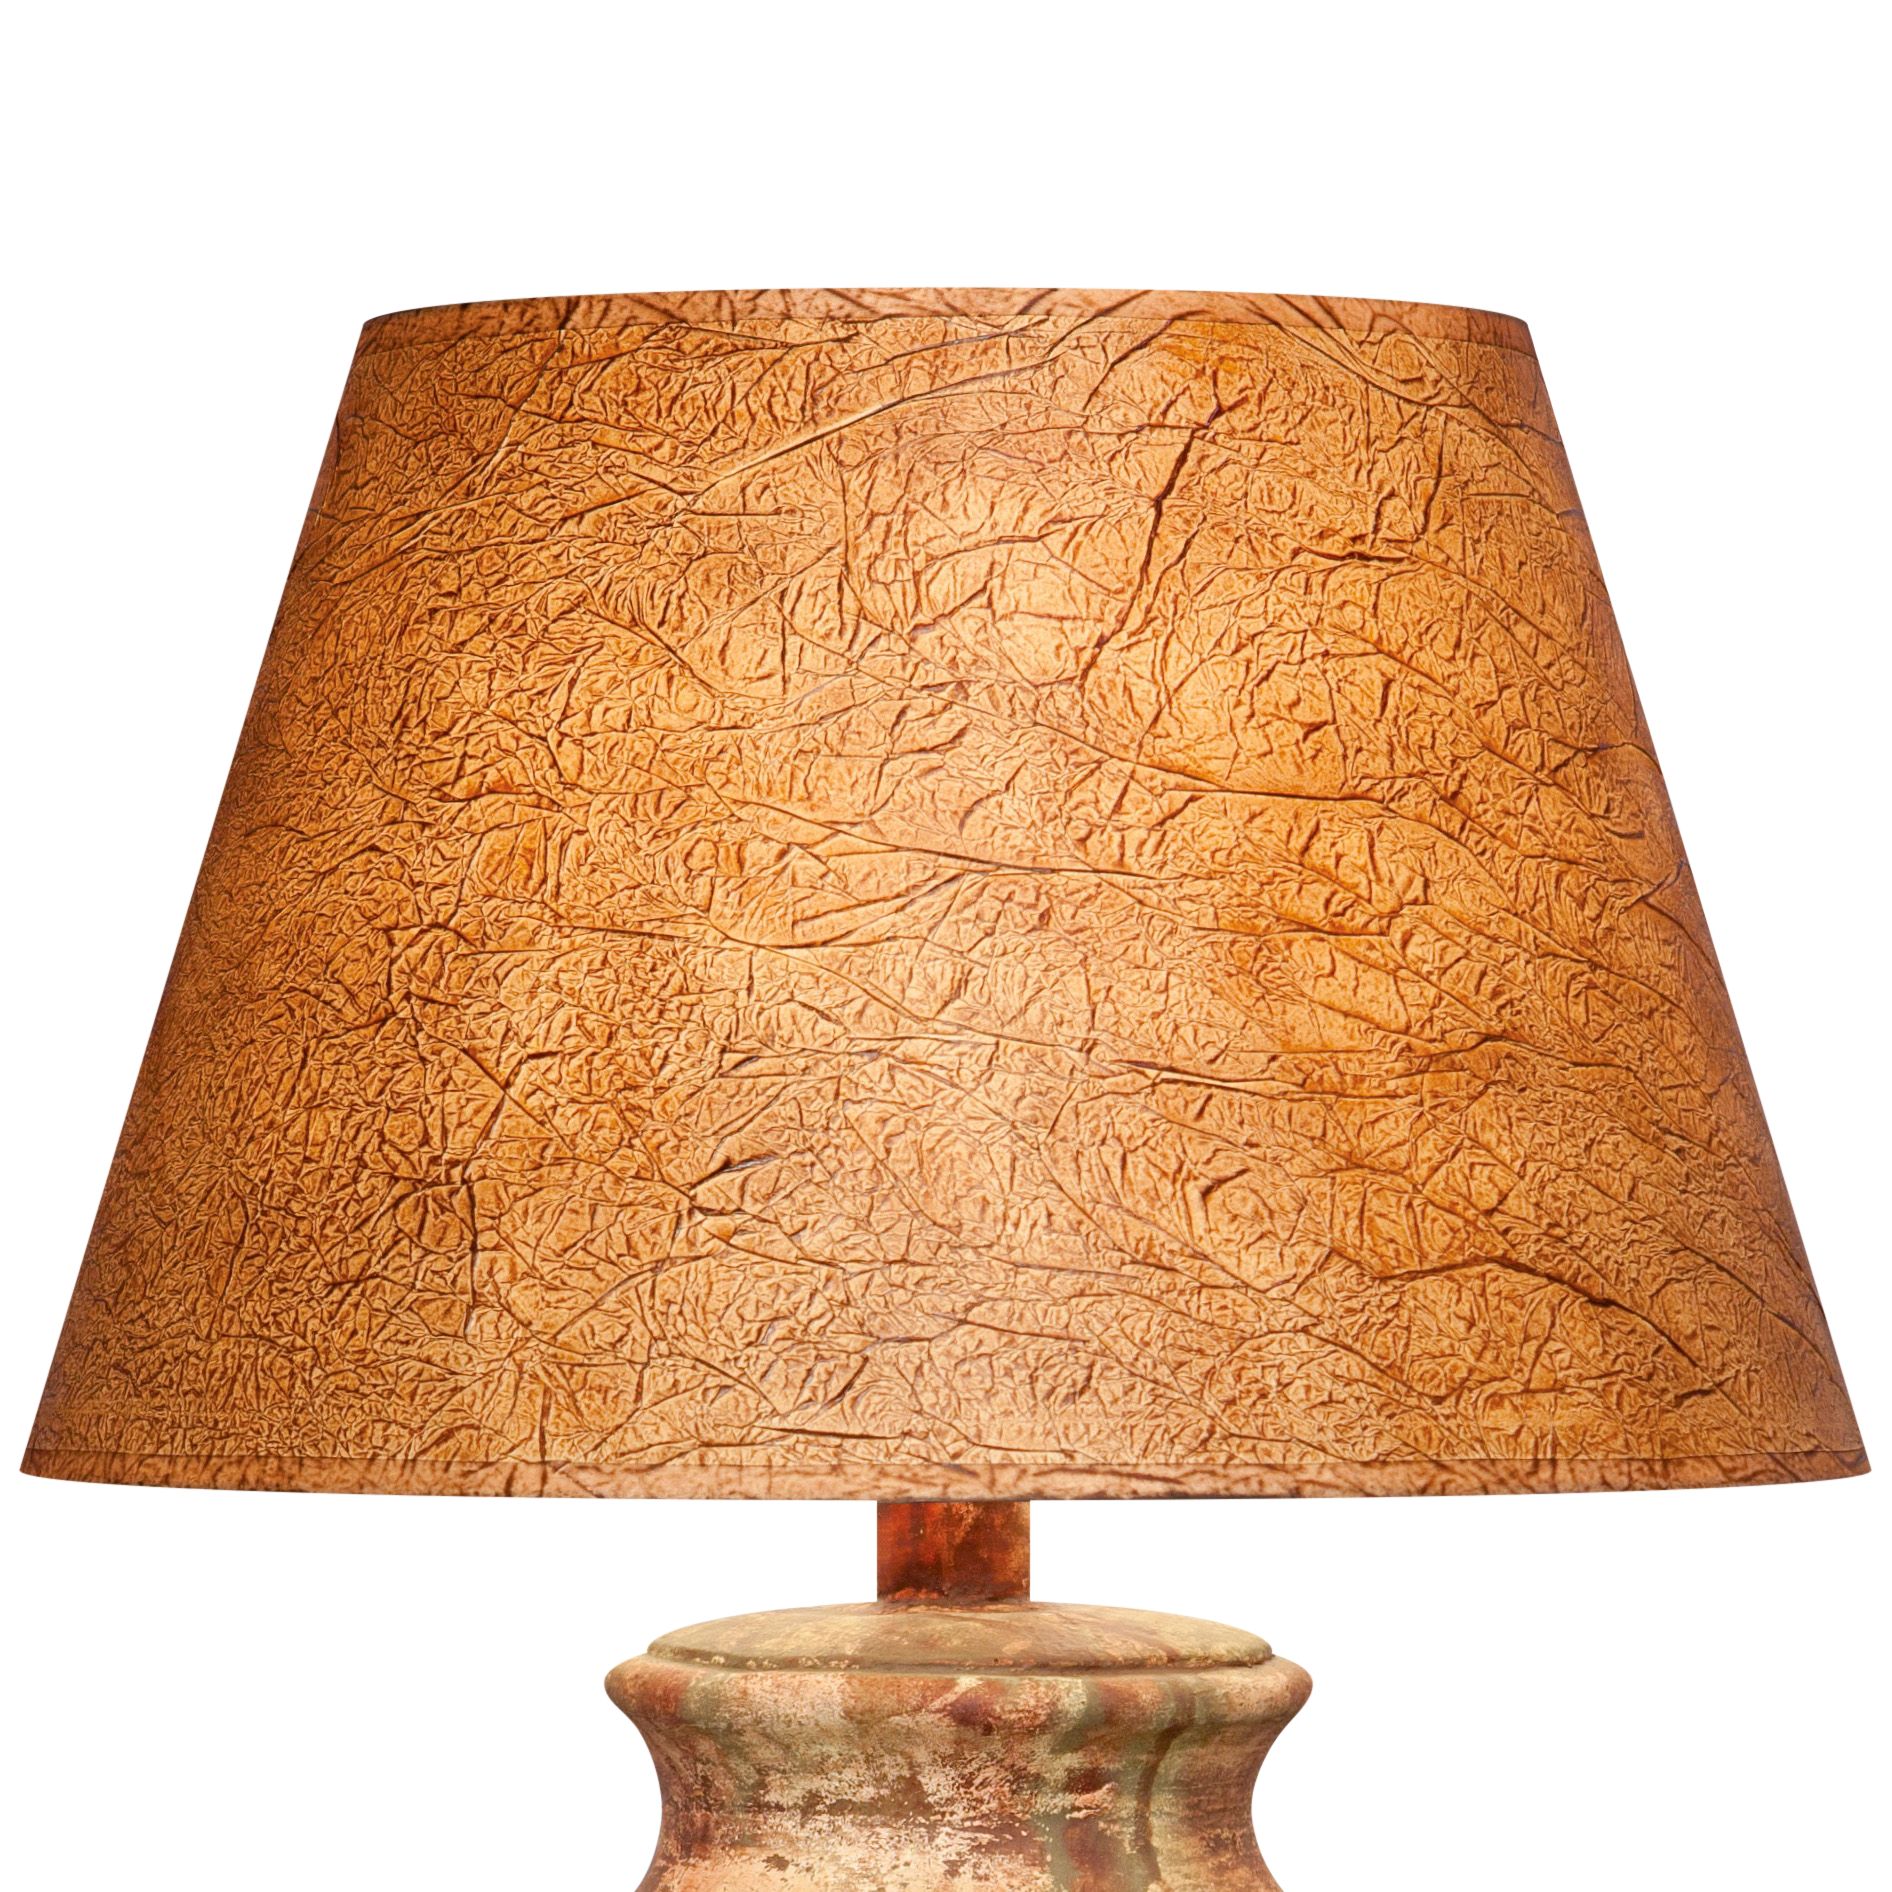 Sedona Rainbow Desert Rustic Western Southwest Style Table Lamp 